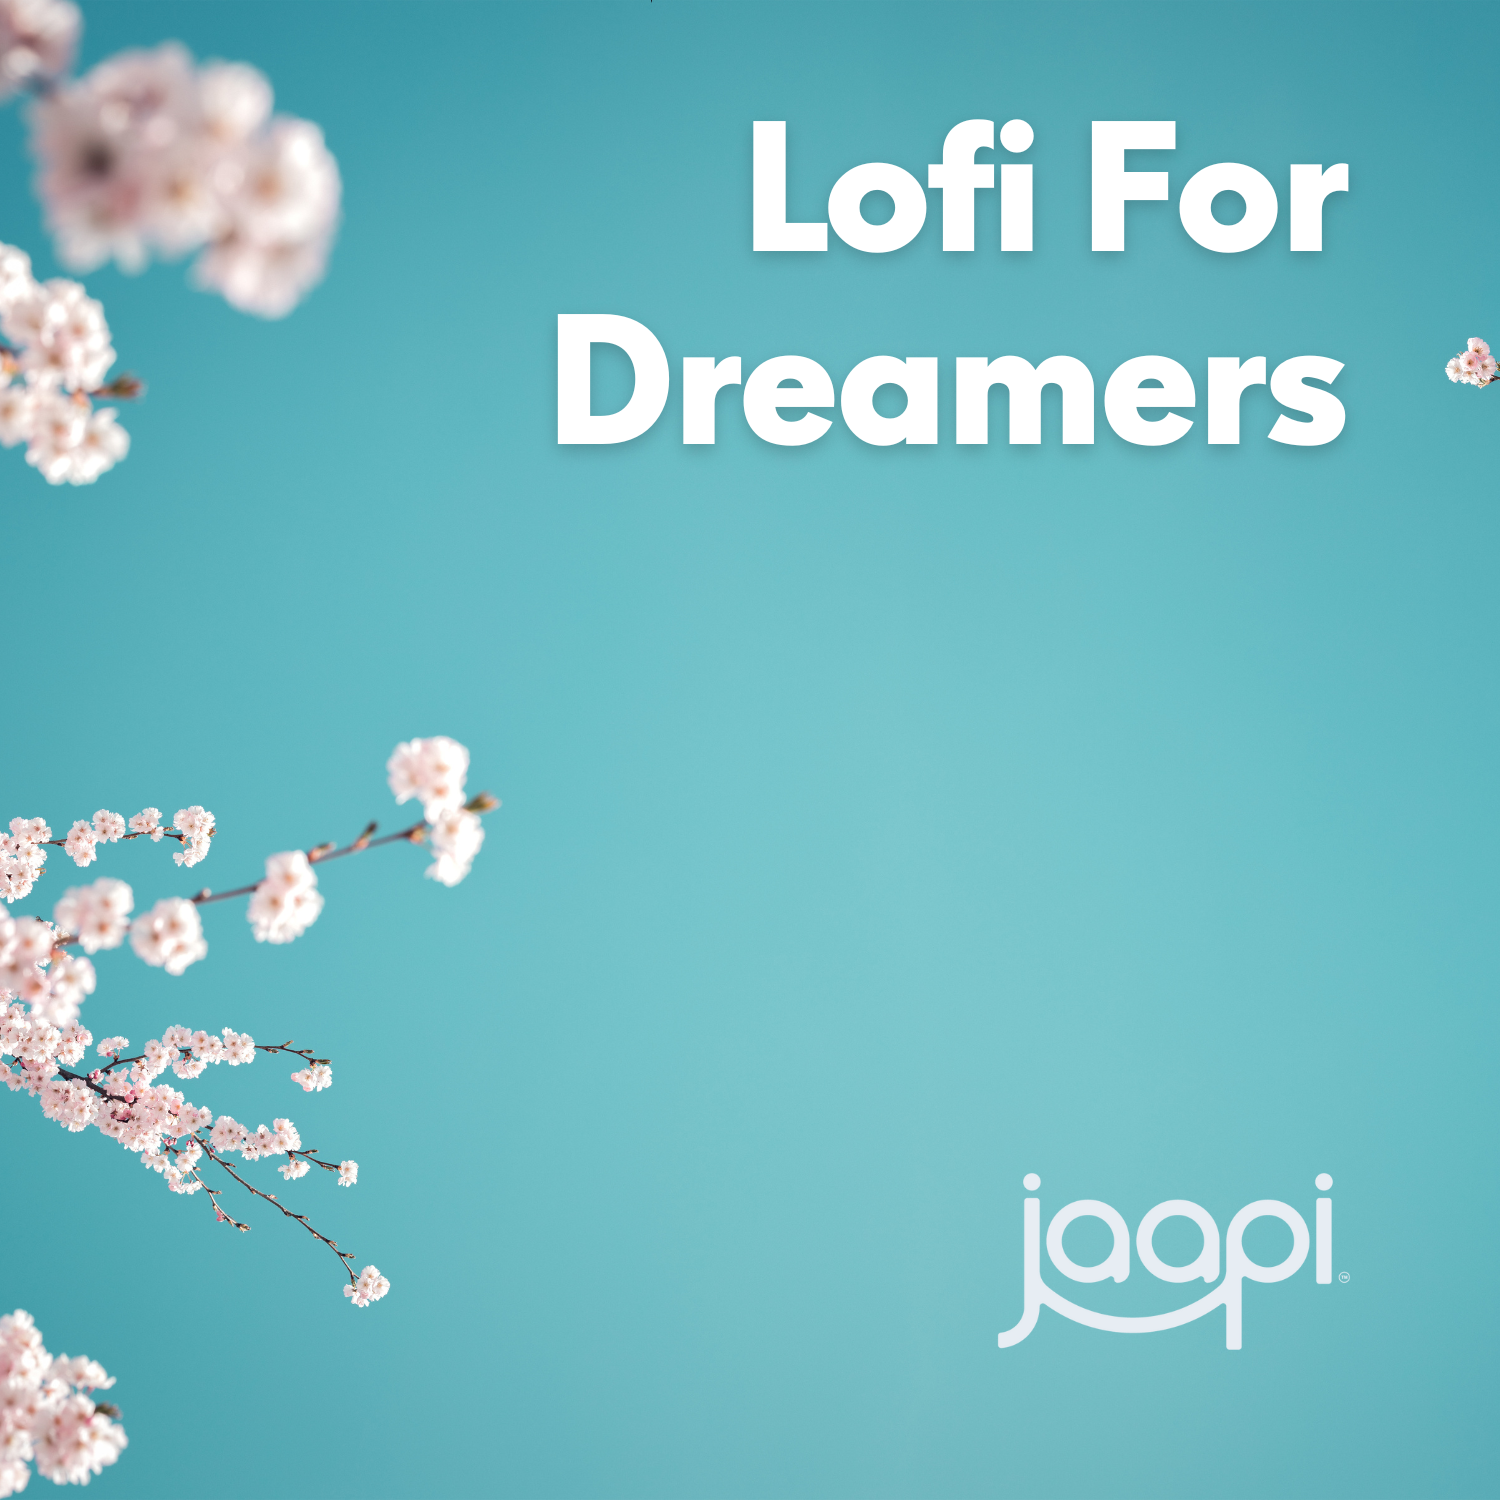 Lofi for Dreamers: Dreamy nostalgic lofi beats